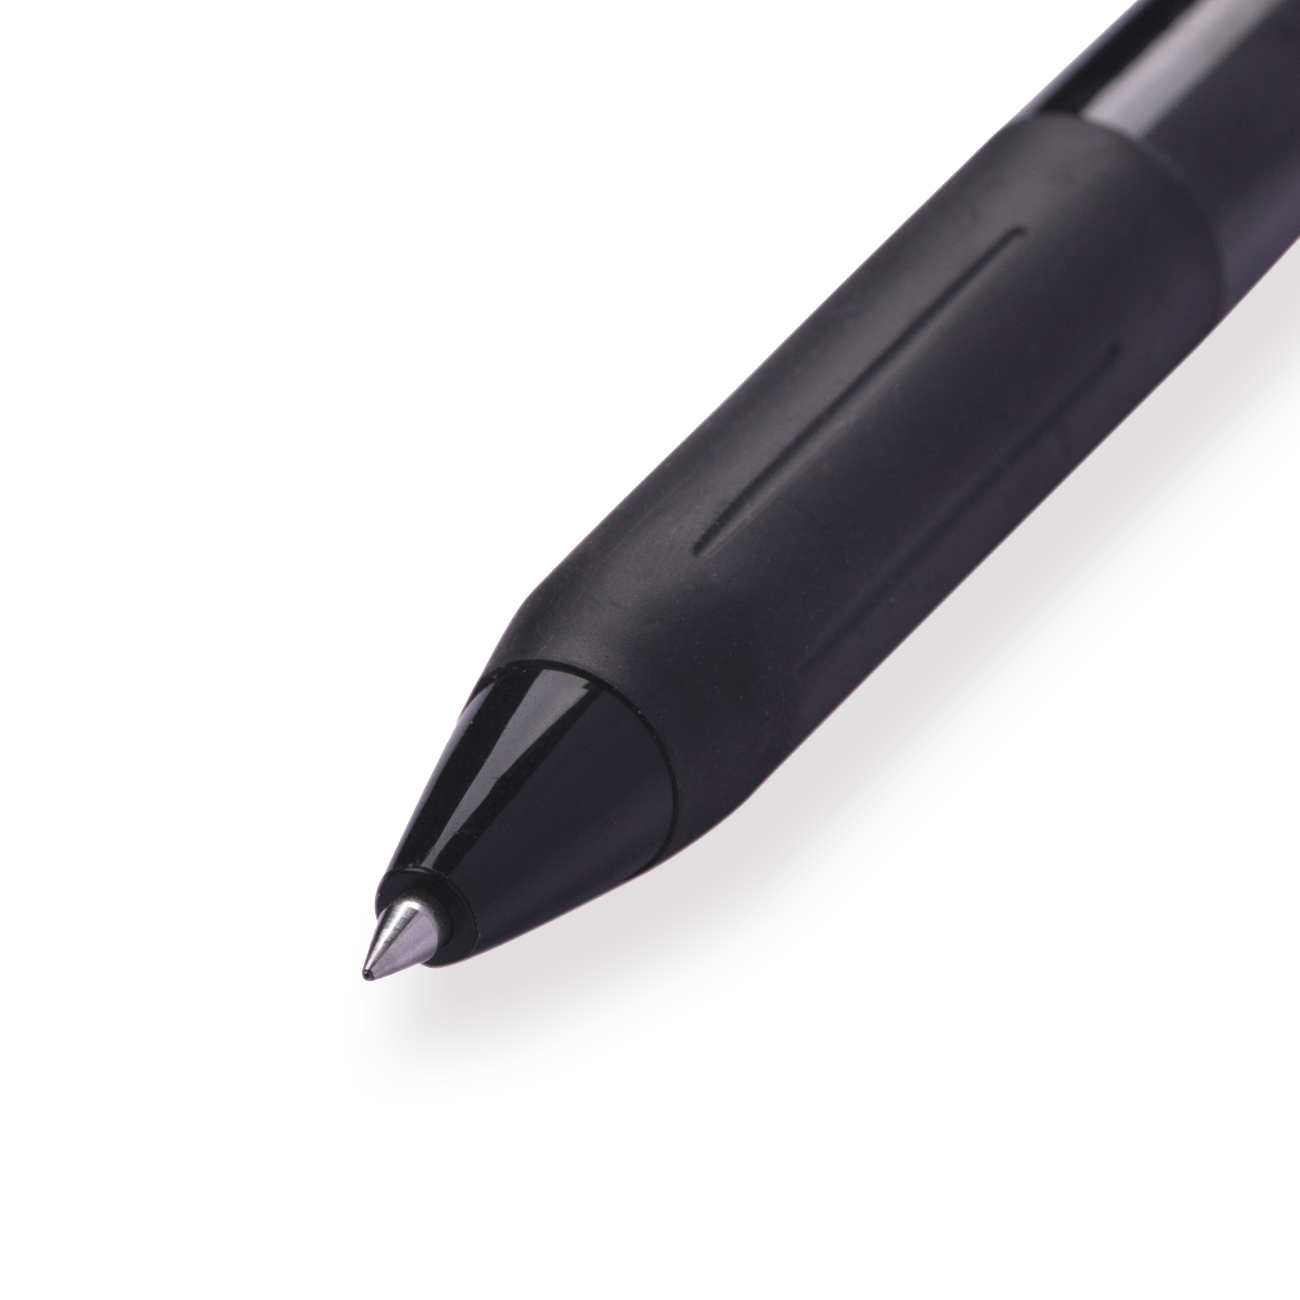 Zebra Sarasa R Limited Edition Gel Ink Pen - 0.4 mm - Black - Black Body